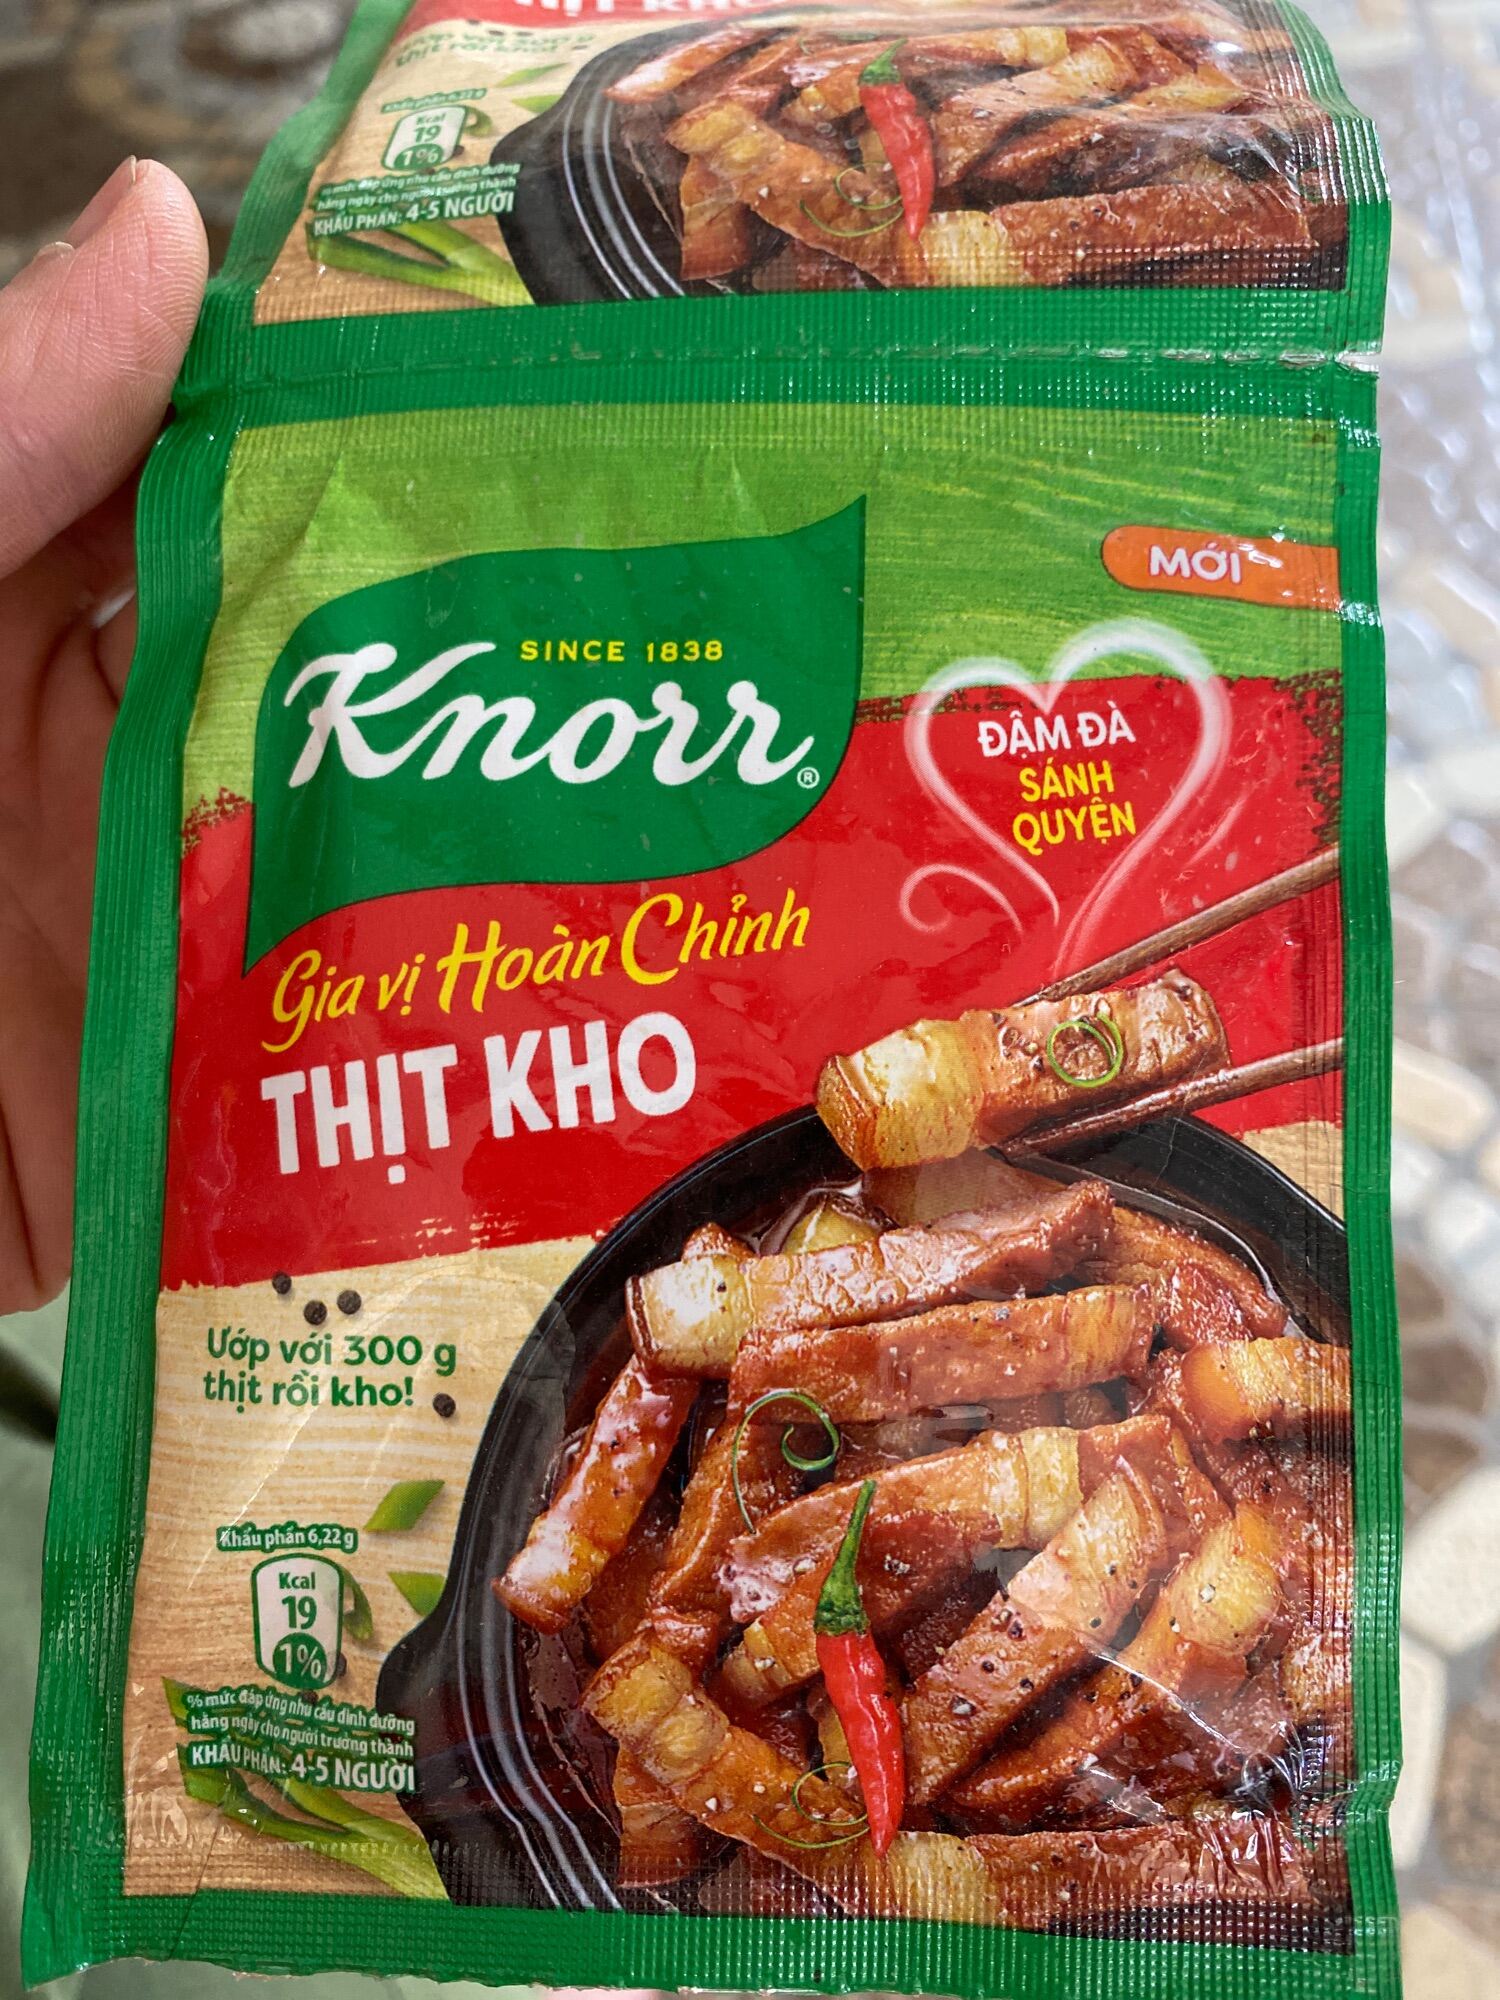 Gói thịt kho Knorr